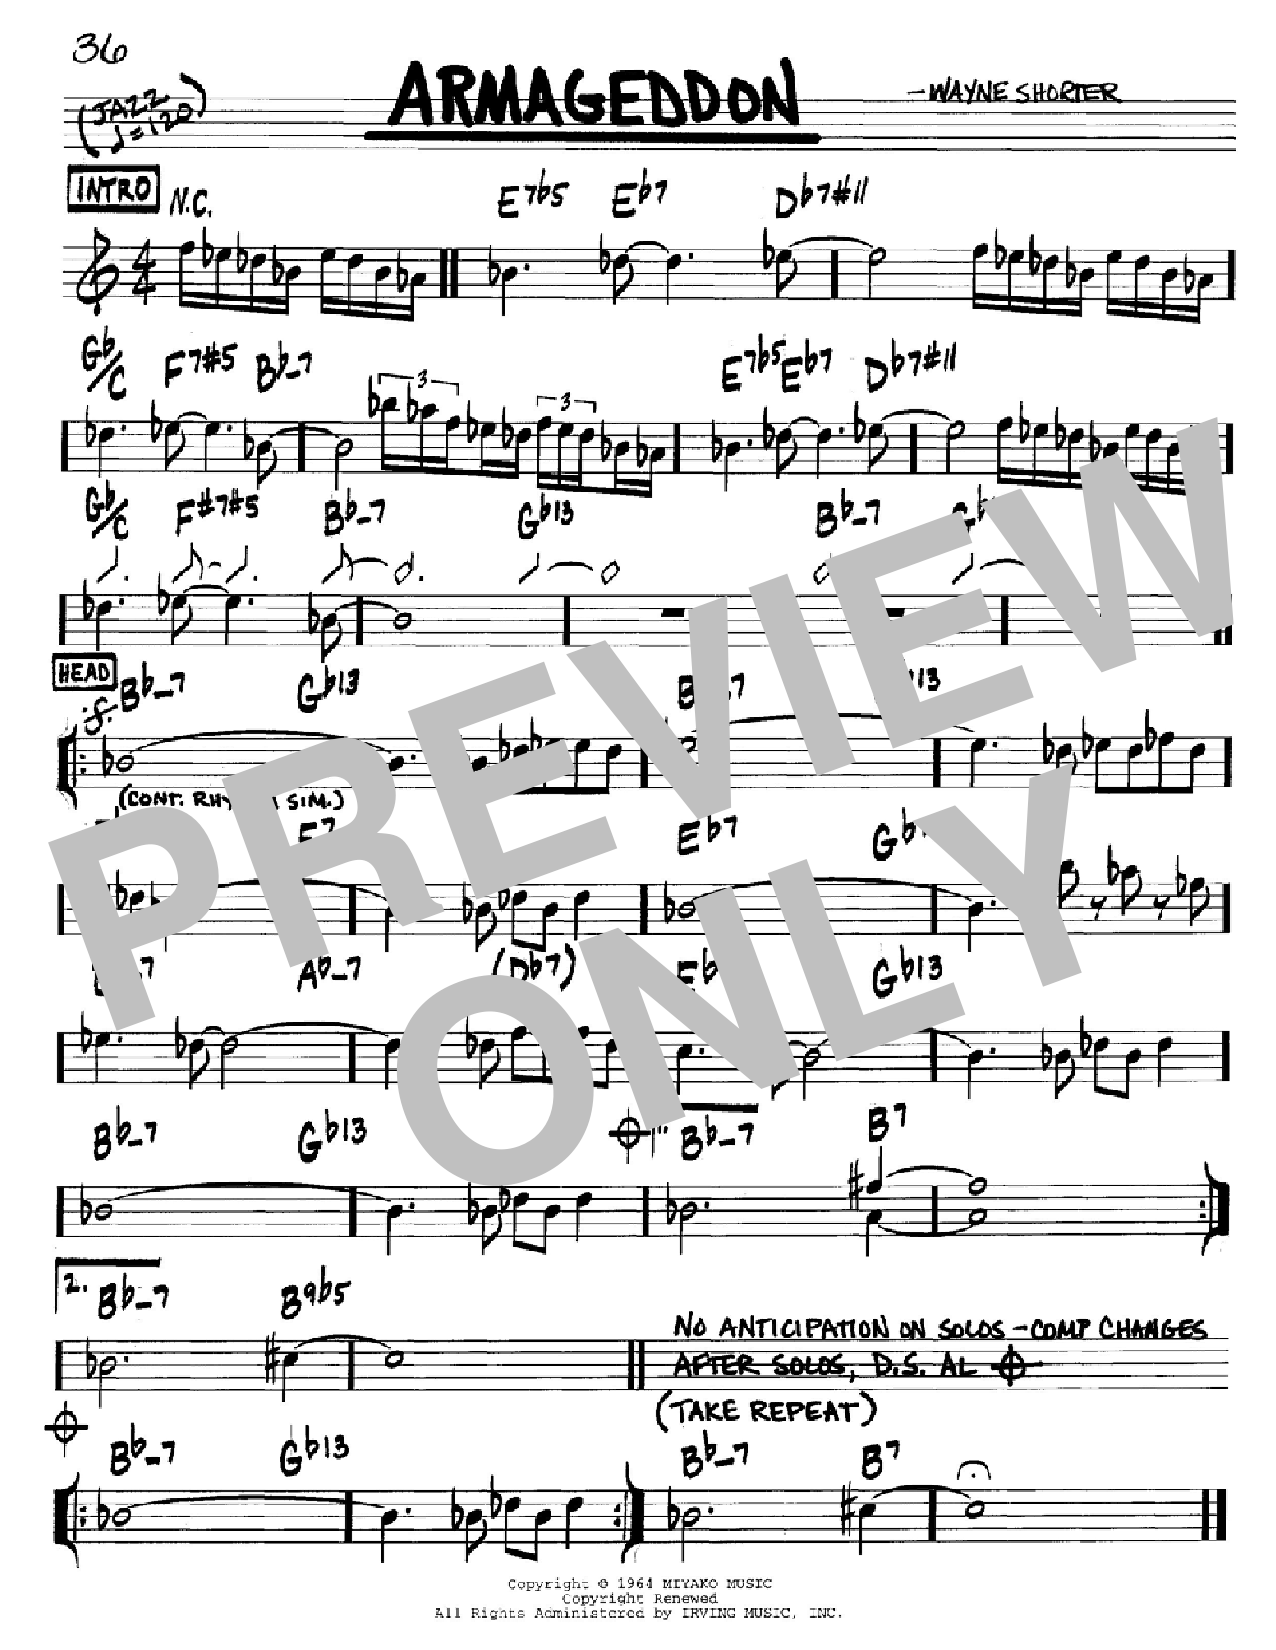 Wayne Shorter Armageddon Sheet Music Notes & Chords for Real Book - Melody & Chords - Eb Instruments - Download or Print PDF